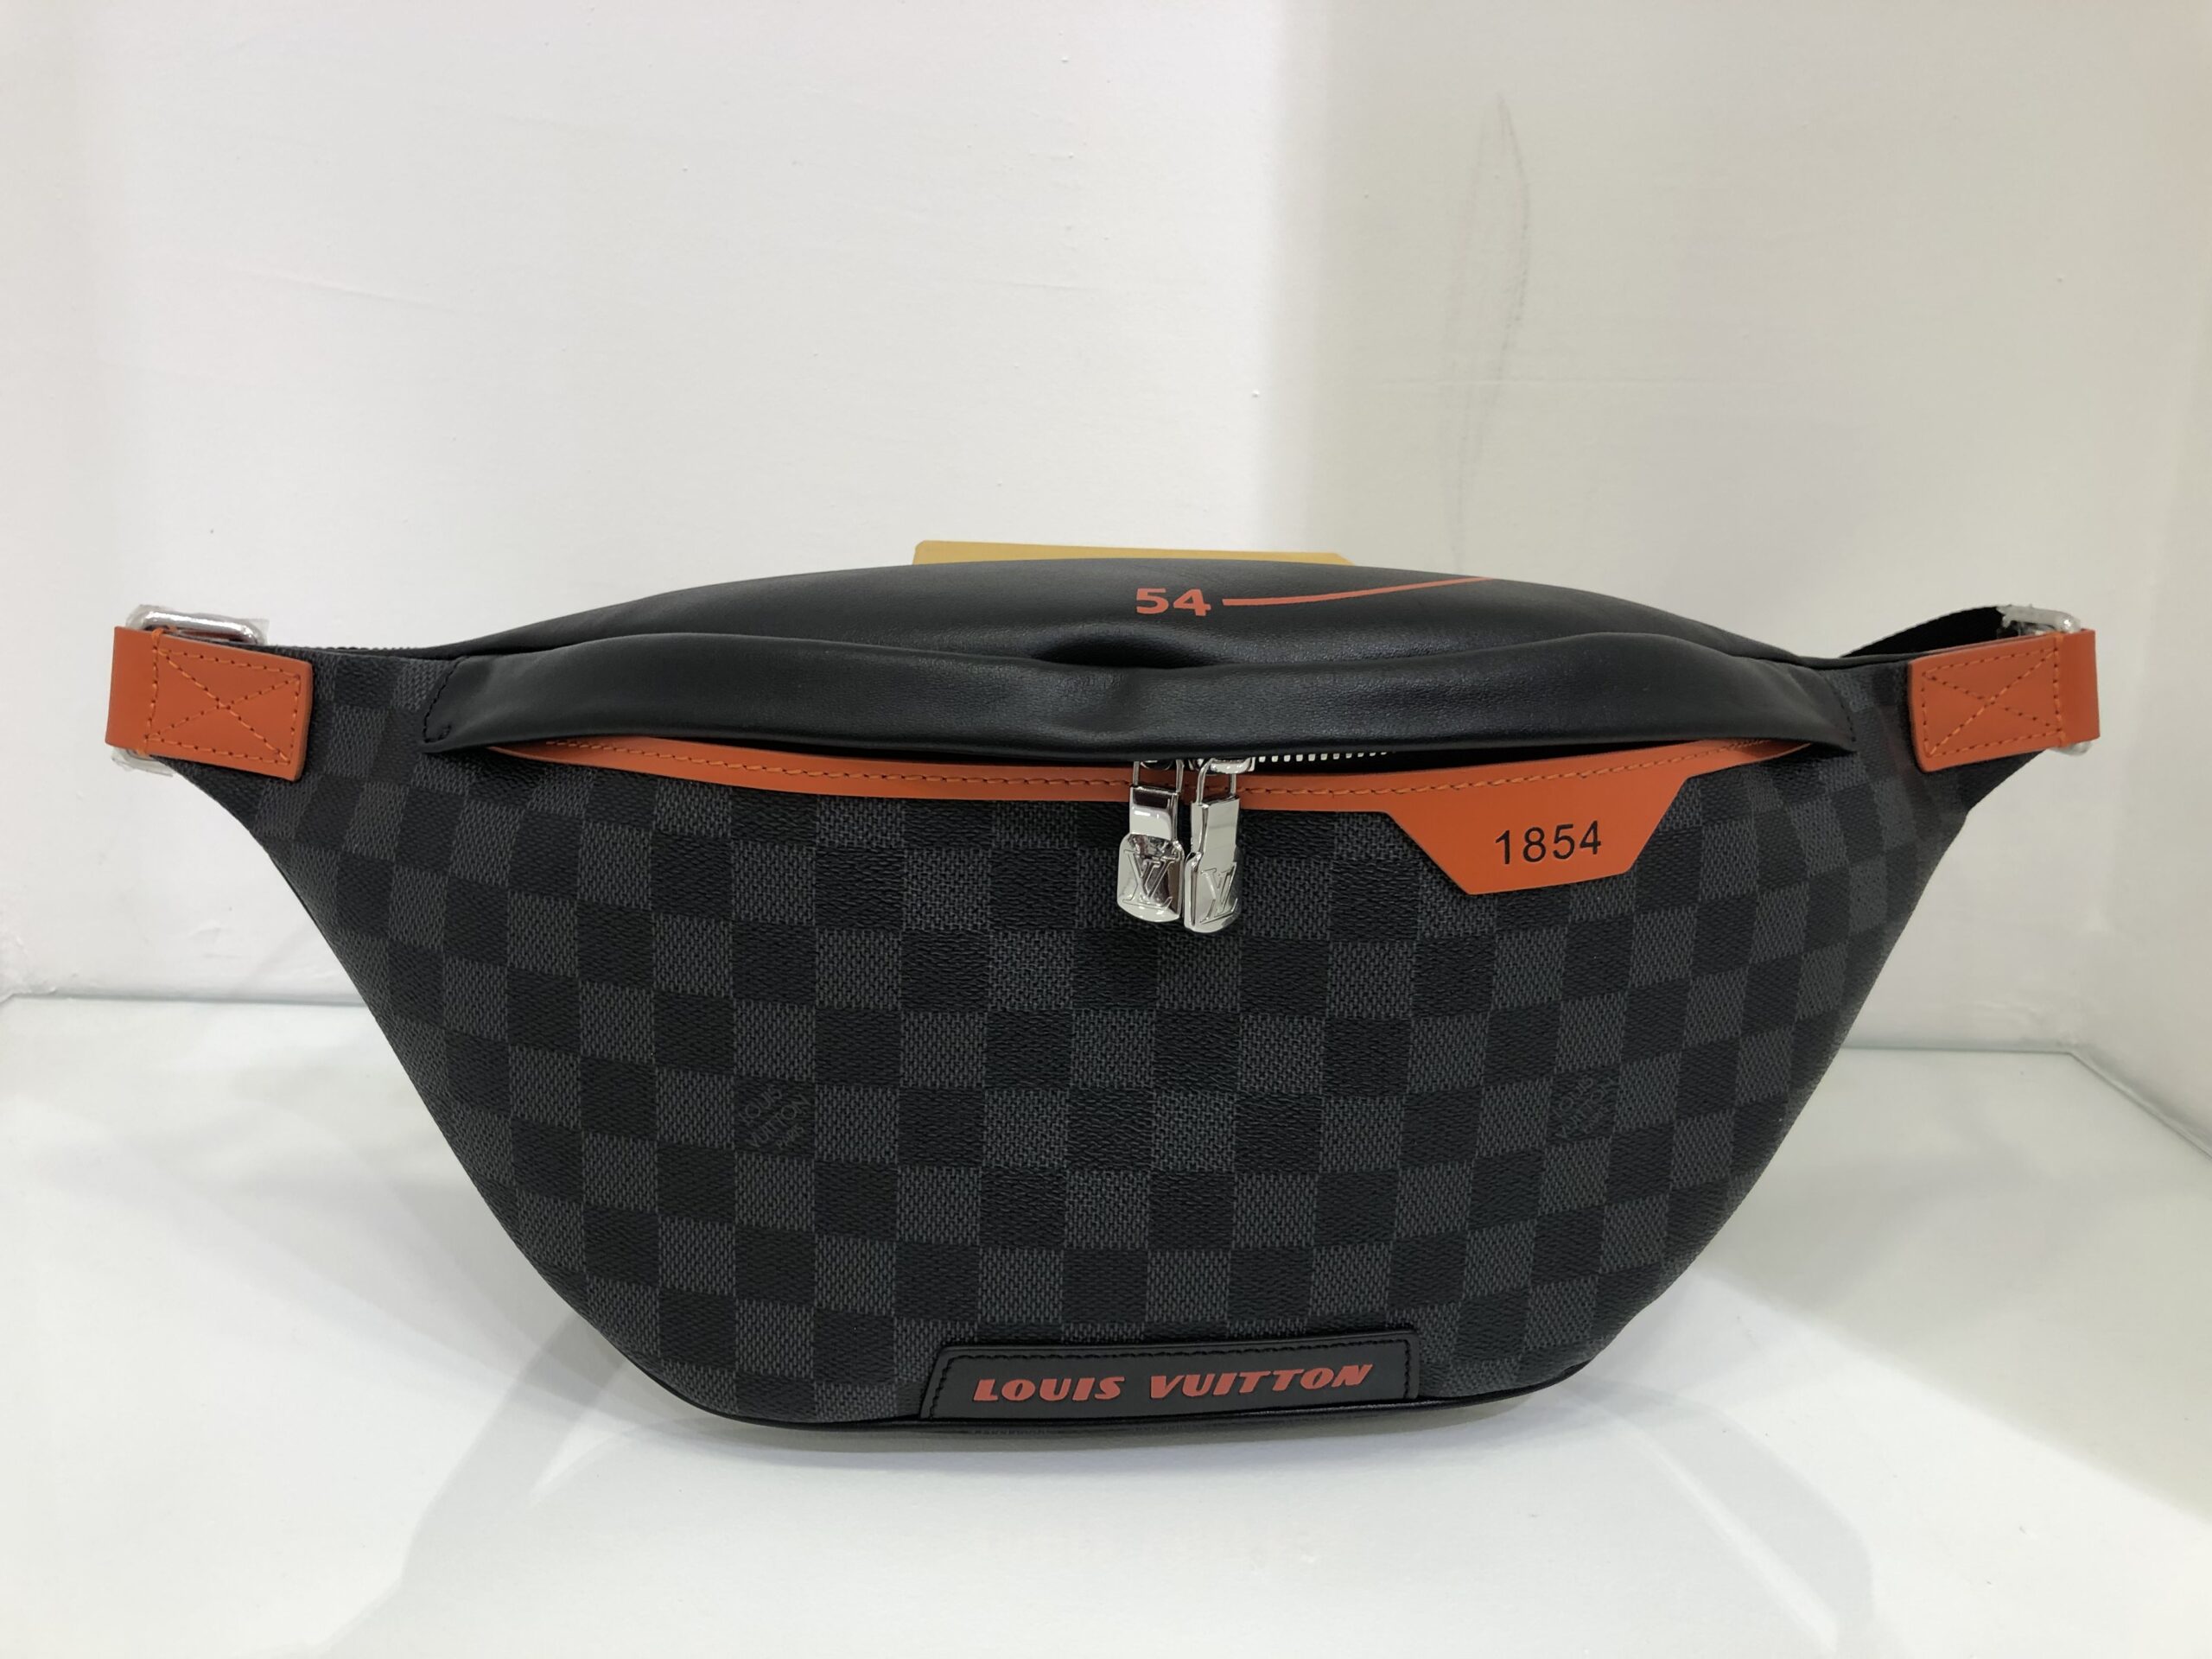 Louis Vuitton belt bag - Rn Atelier Luxury Clothing, Bags, Accessories